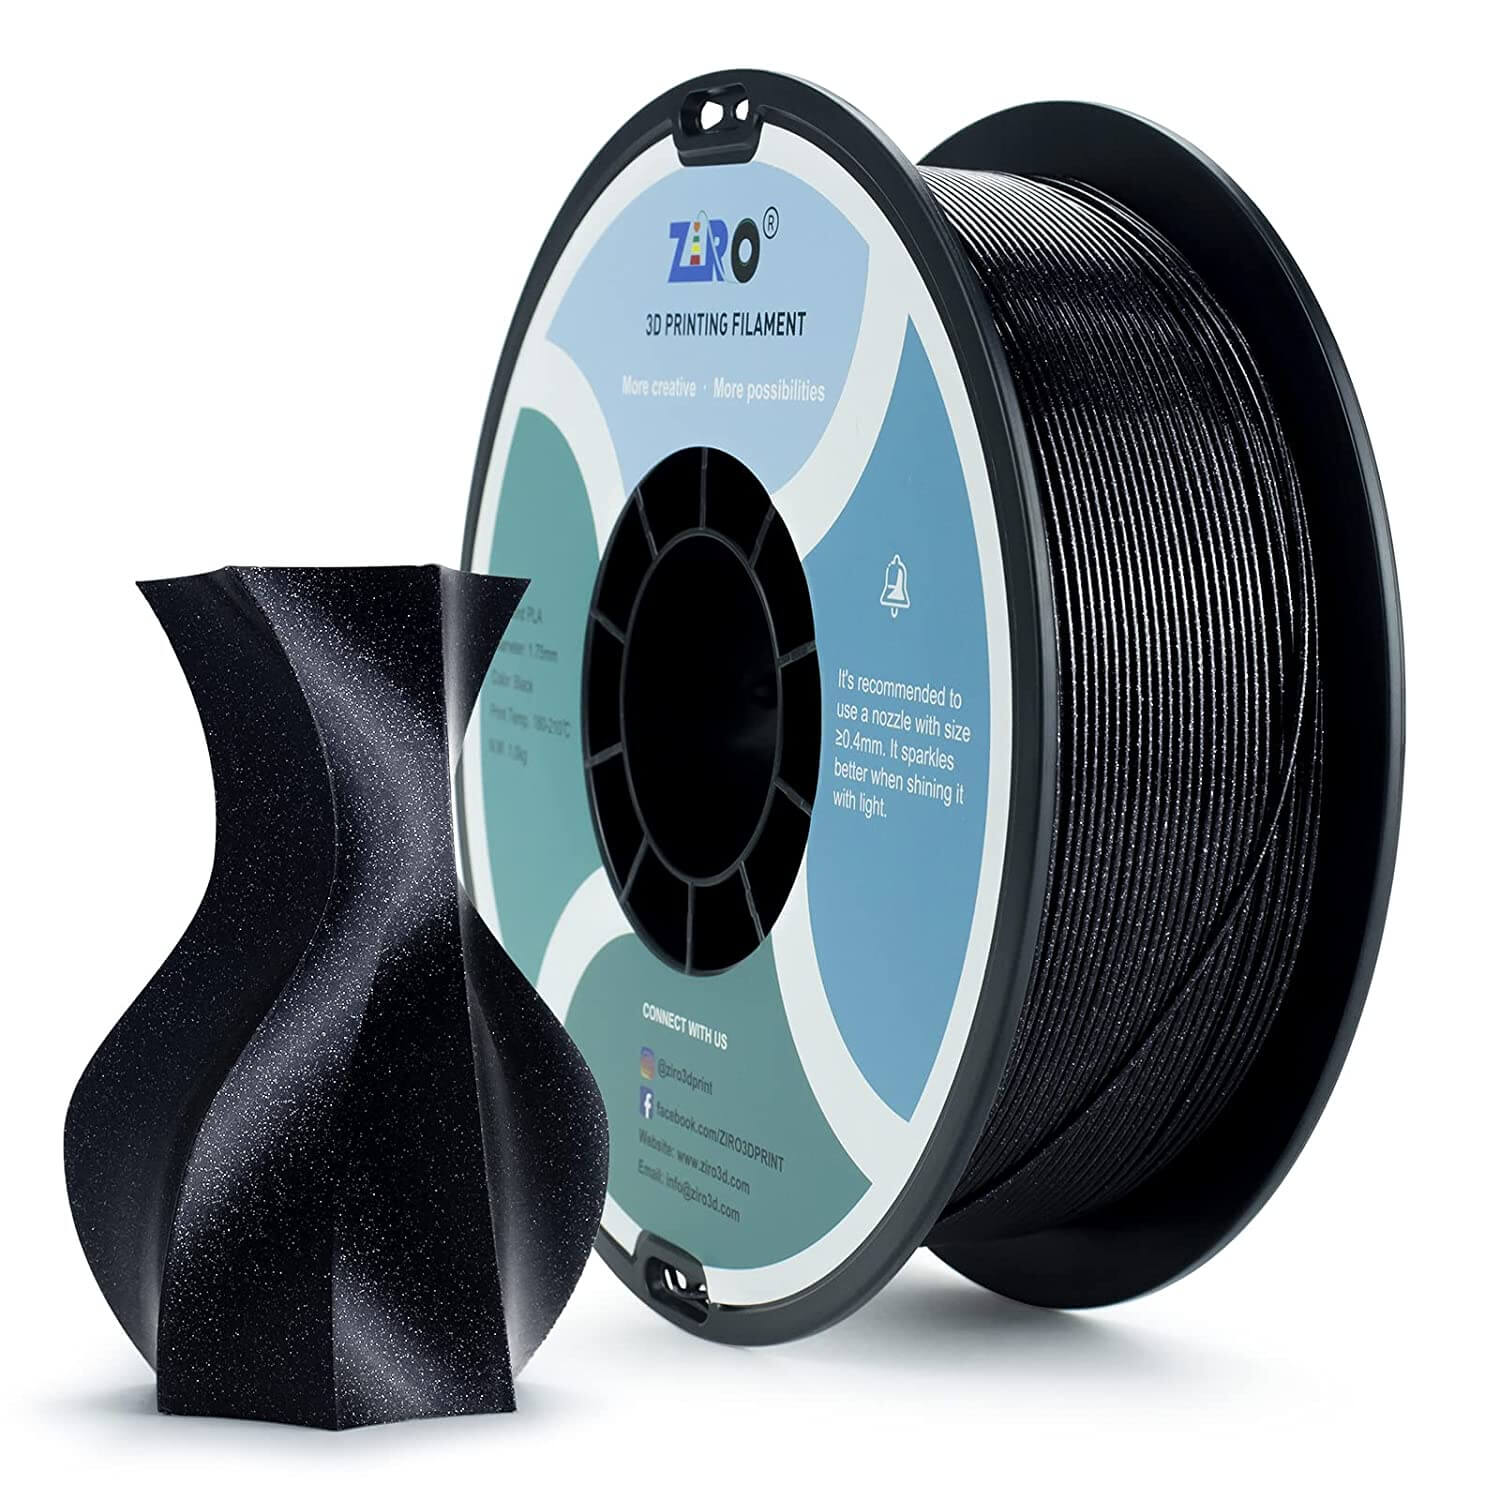 DURAMIC 3D PETG Filament 1.75mm, 3D Printing filament 1kg Spool(2.2lbs –  Duramic 3D